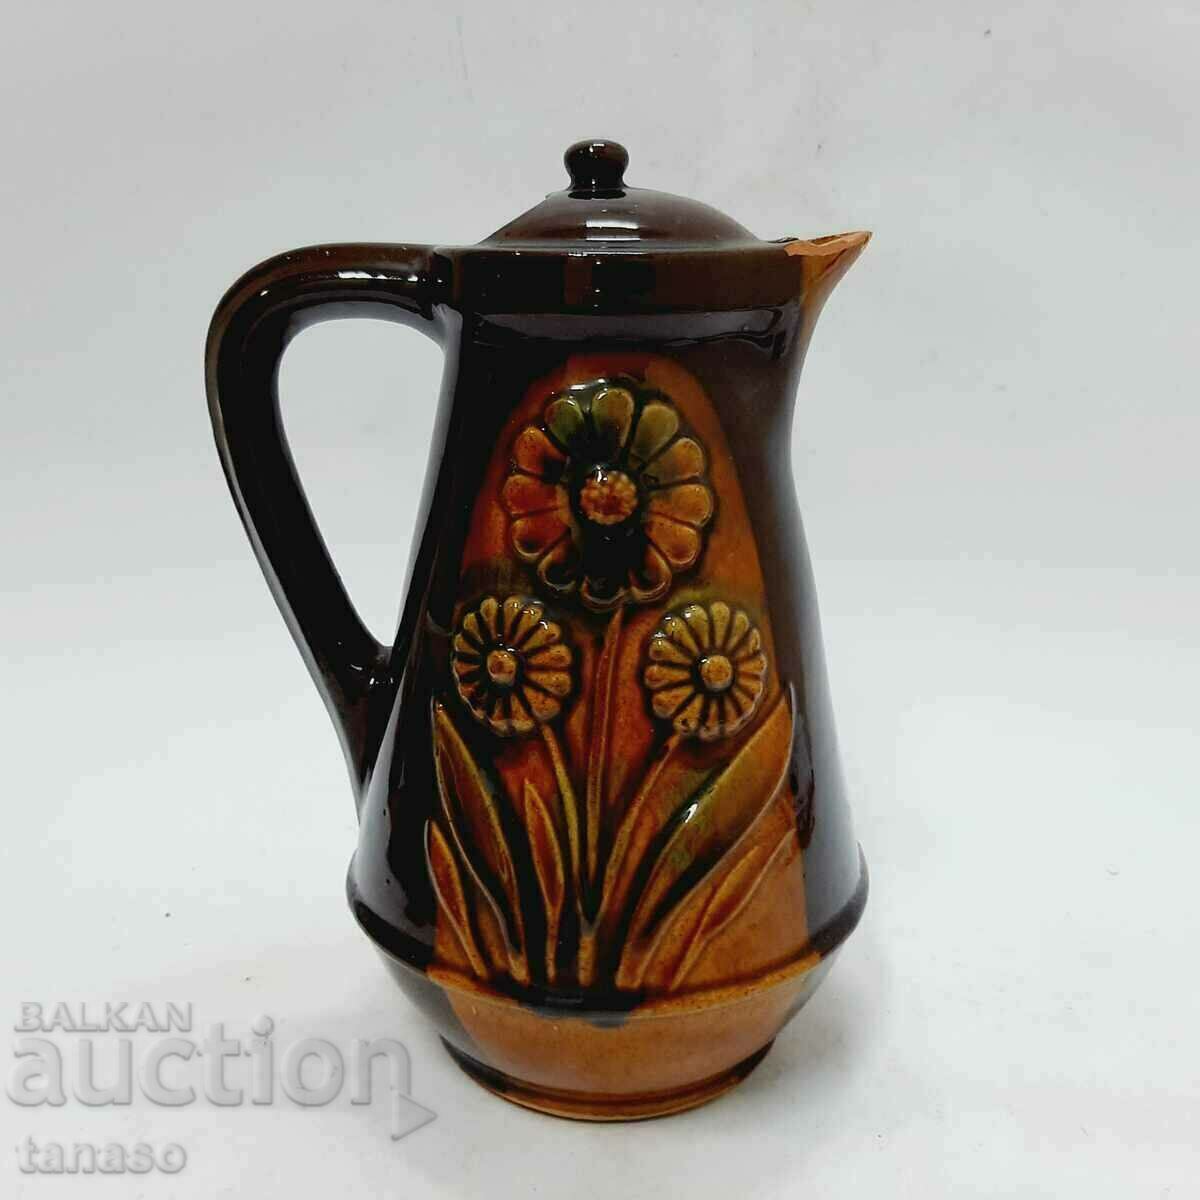 Old ceramic jug(10.1)